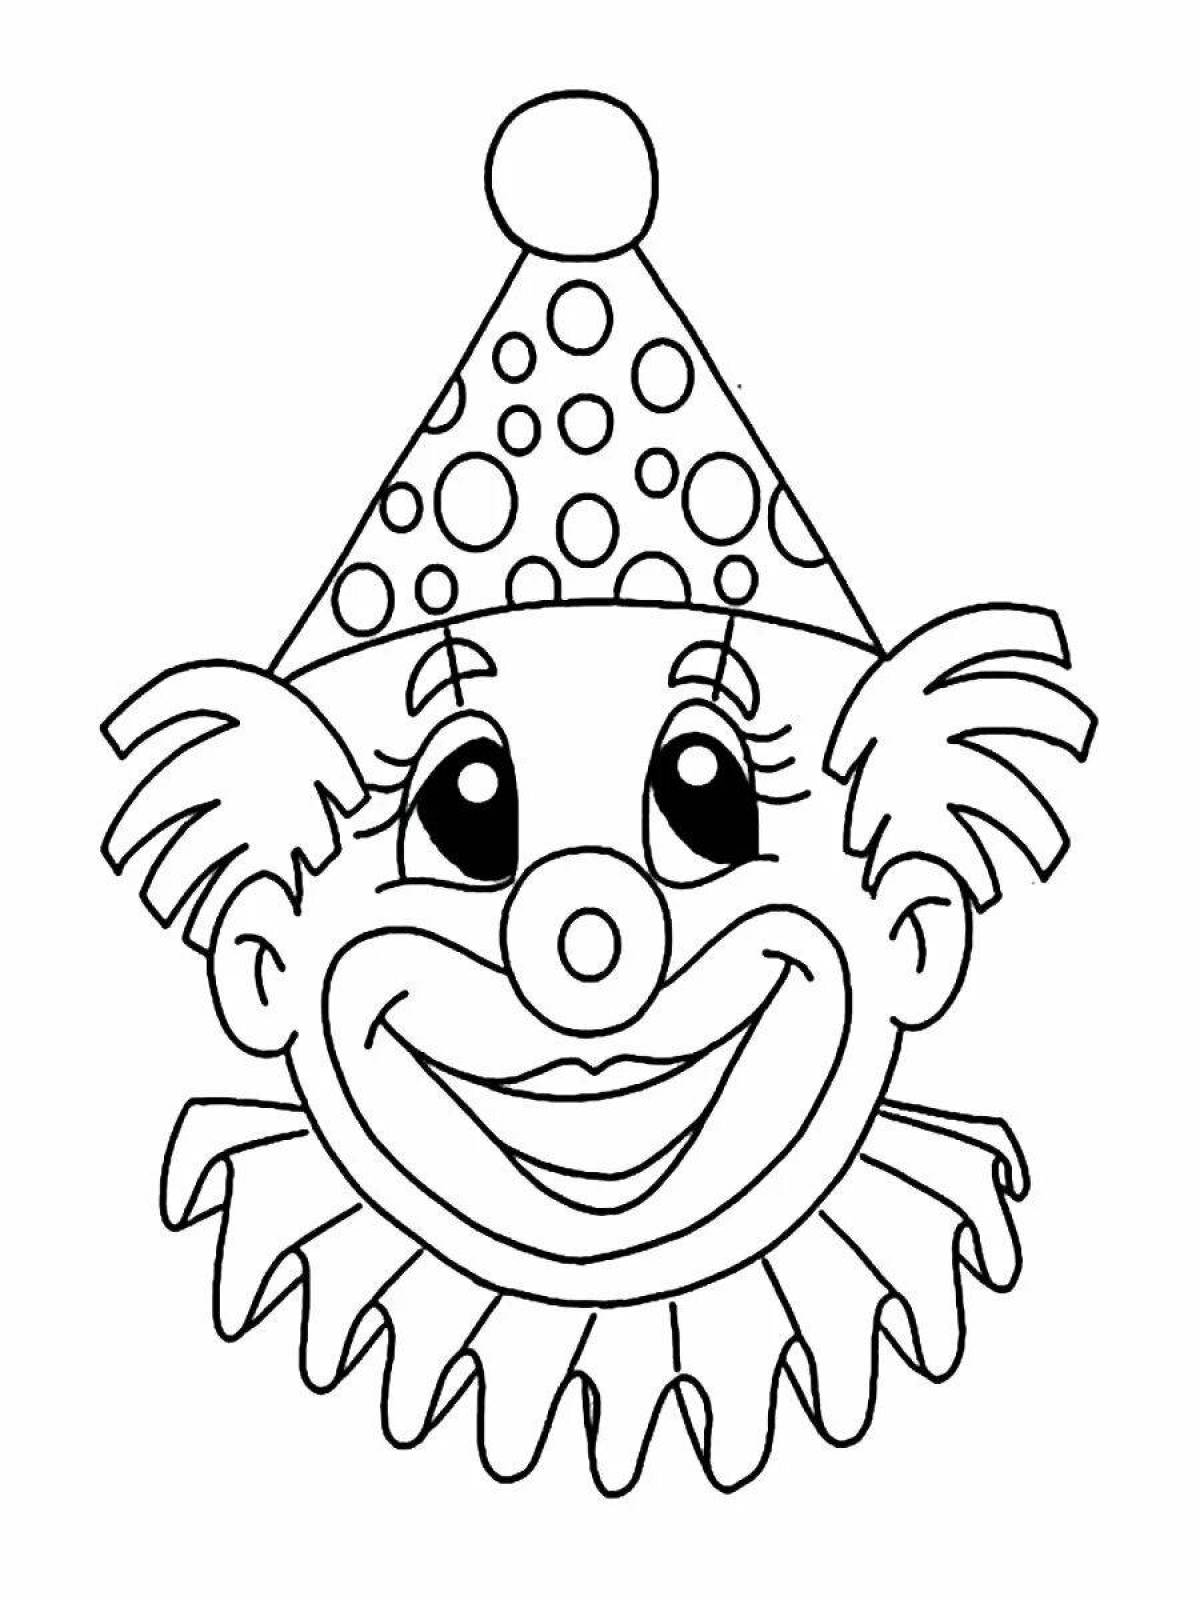 Раскраска клоун для детей 3 4 лет. Клоун раскраска. Клоун раскраска для детей. Веселый клоун раскраска. Лицо клоуна раскраска.